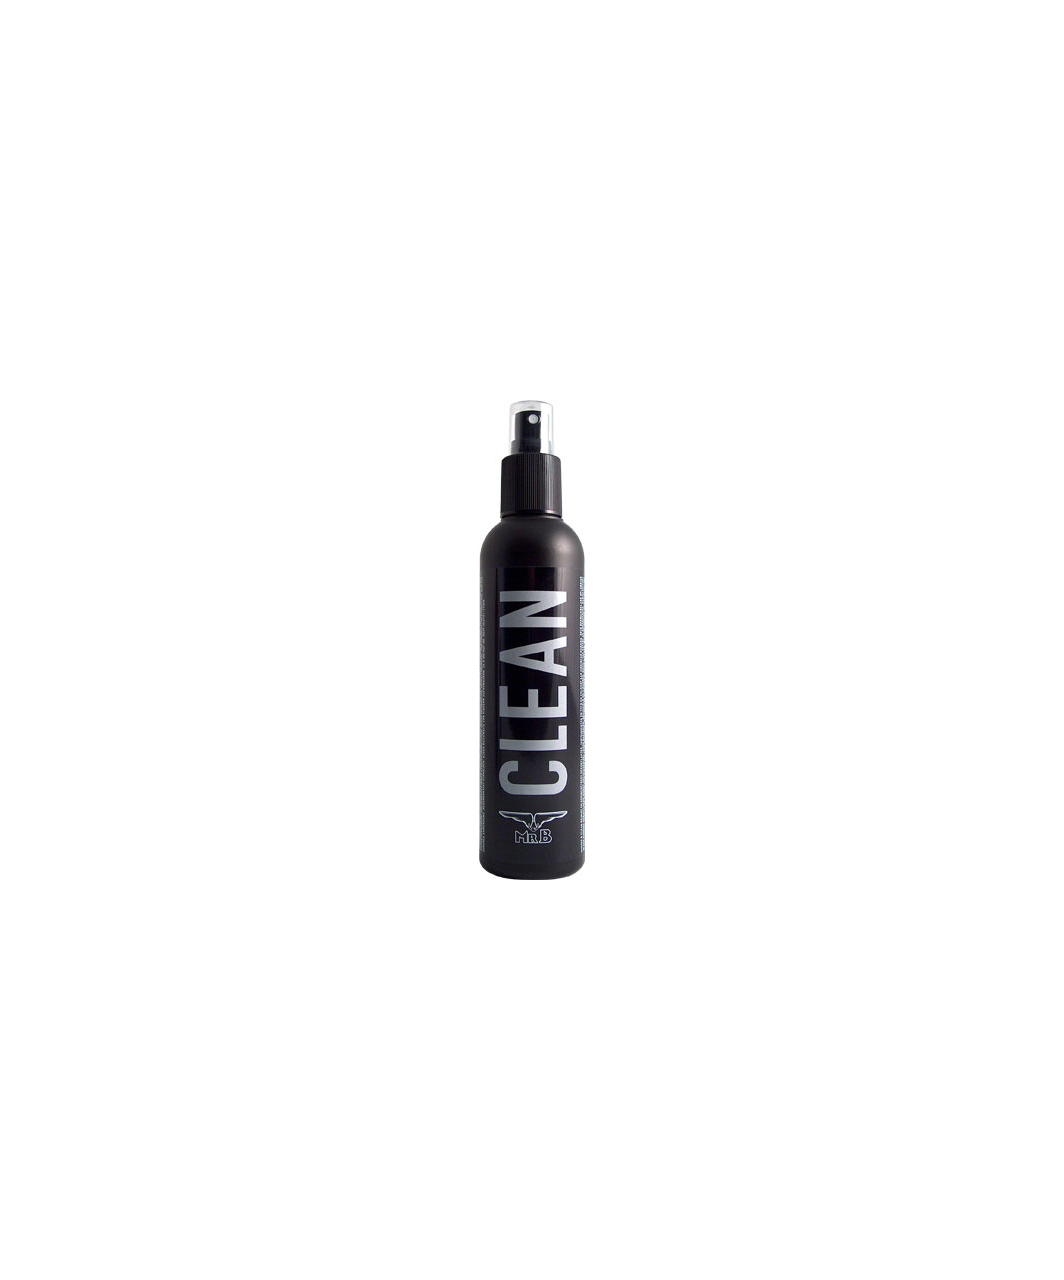 Mister B Clean spray (200 ml)